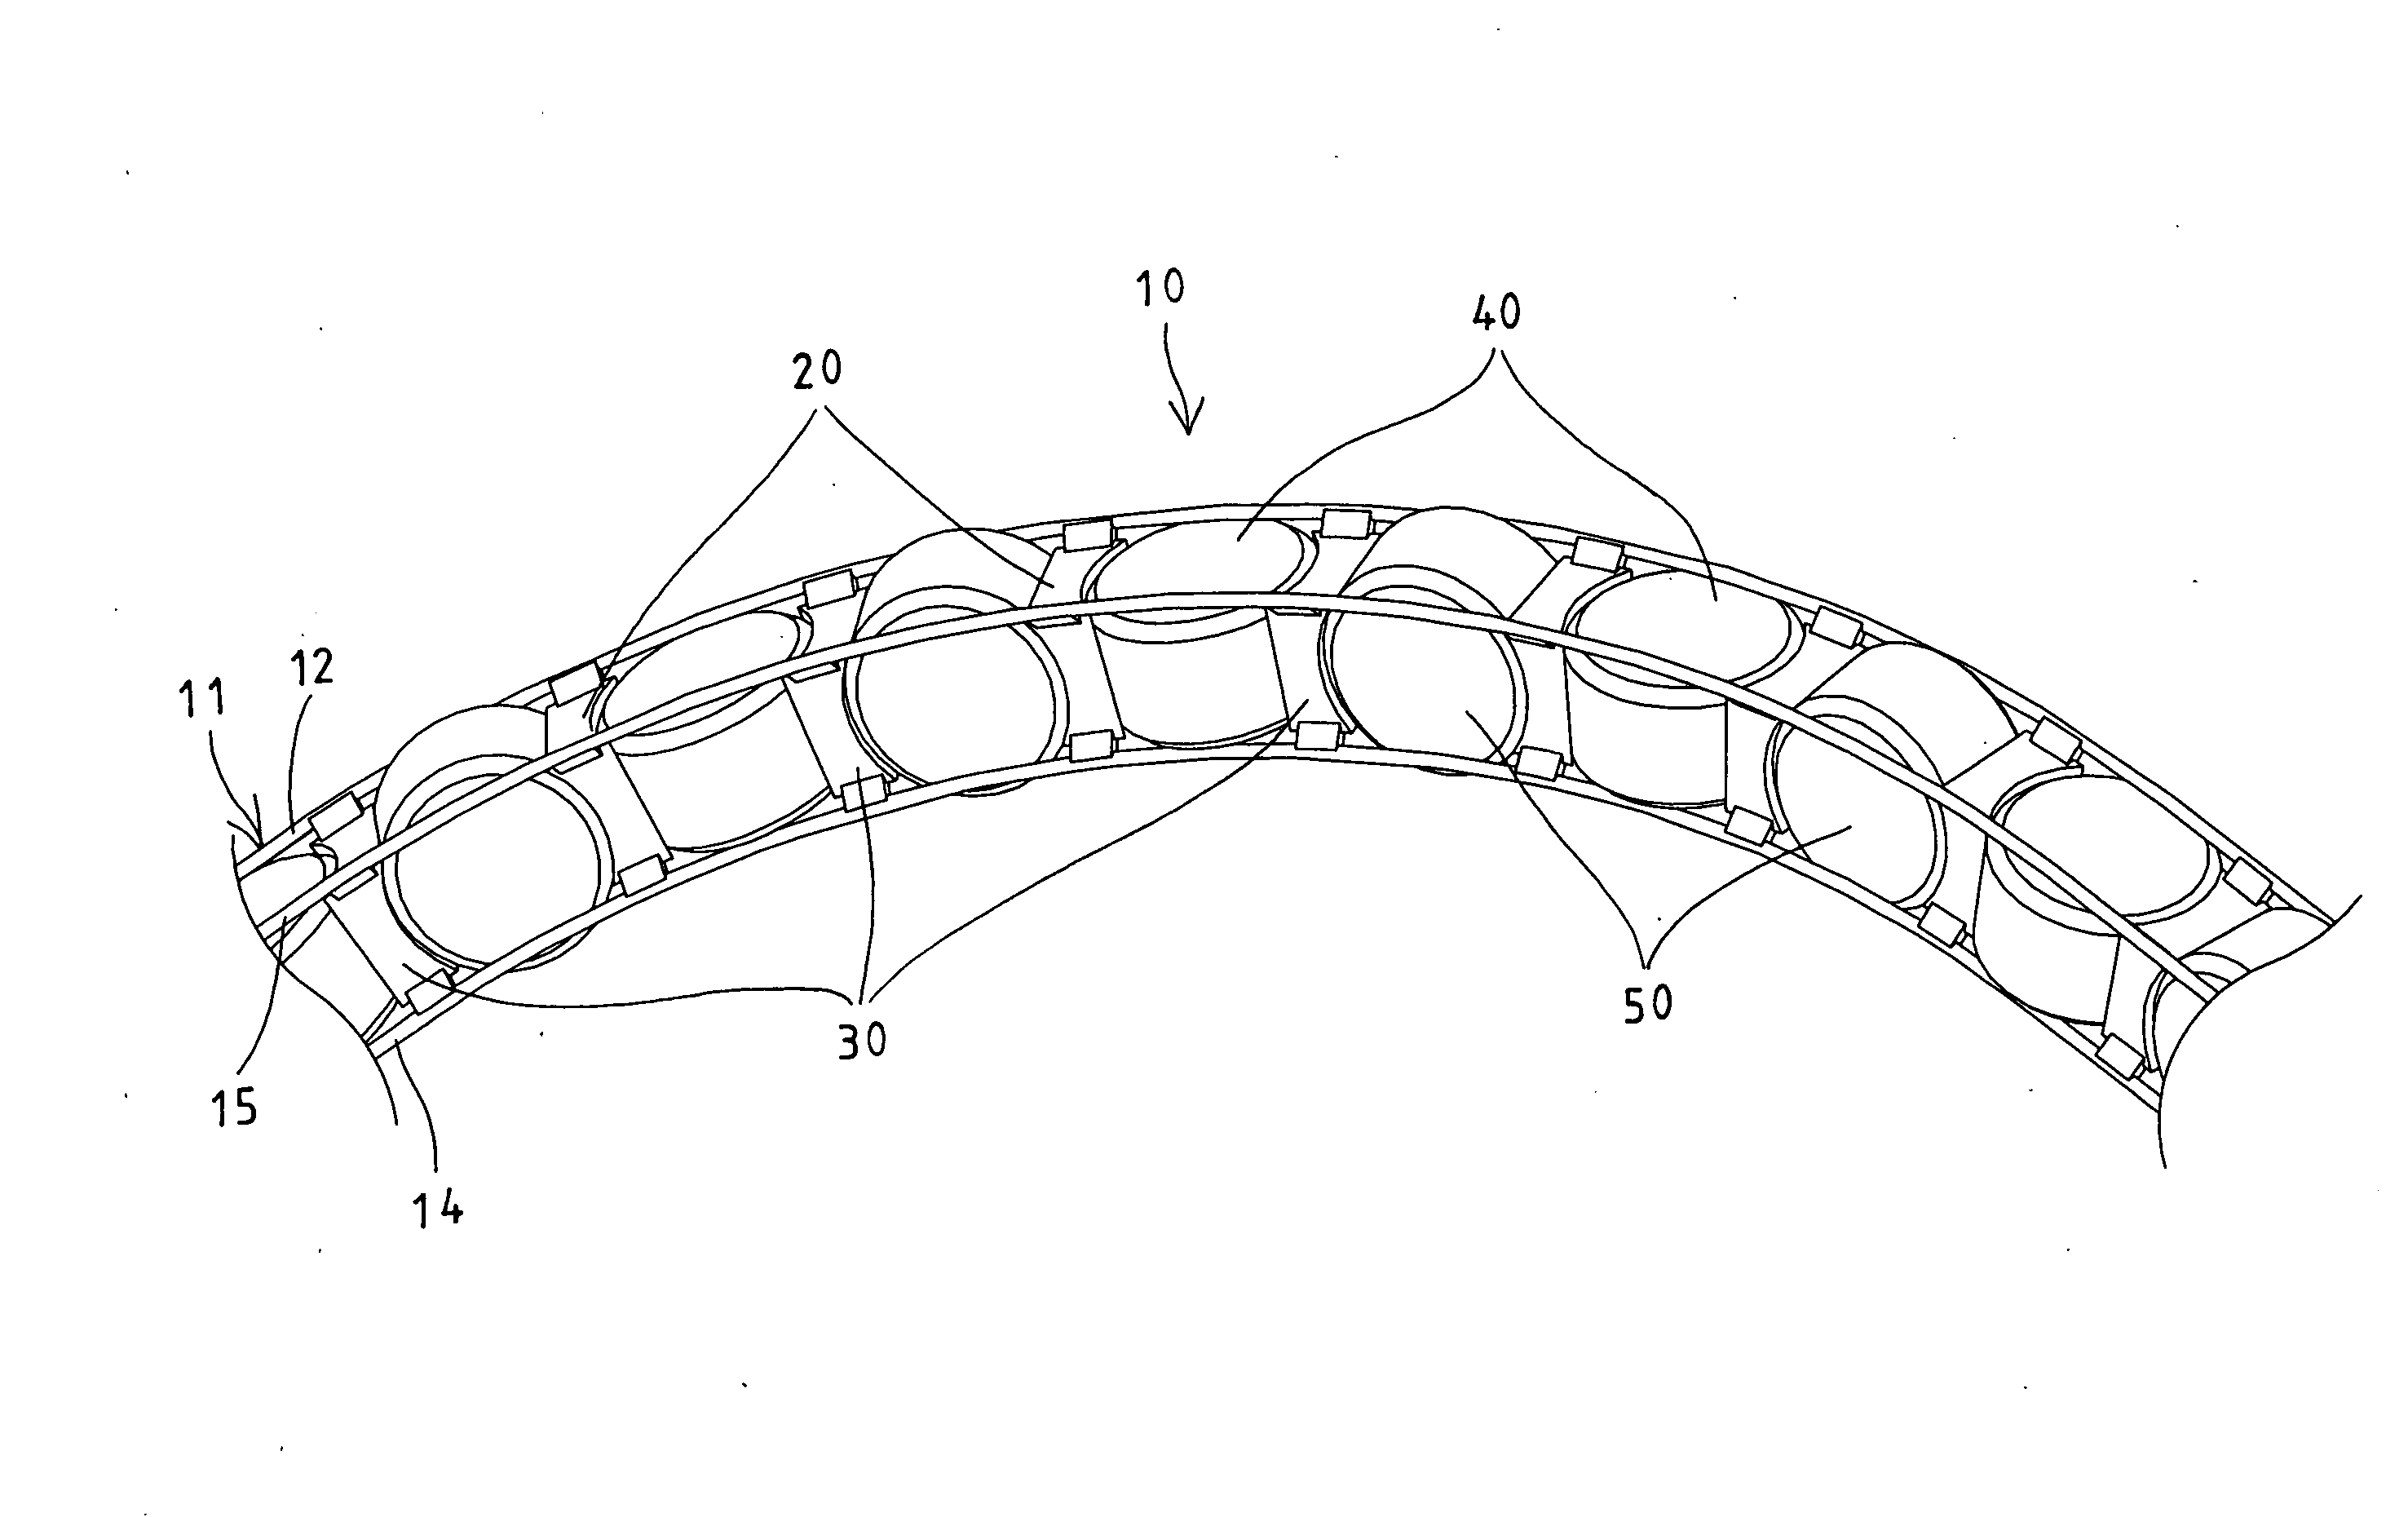 Roller holder for motion guide device